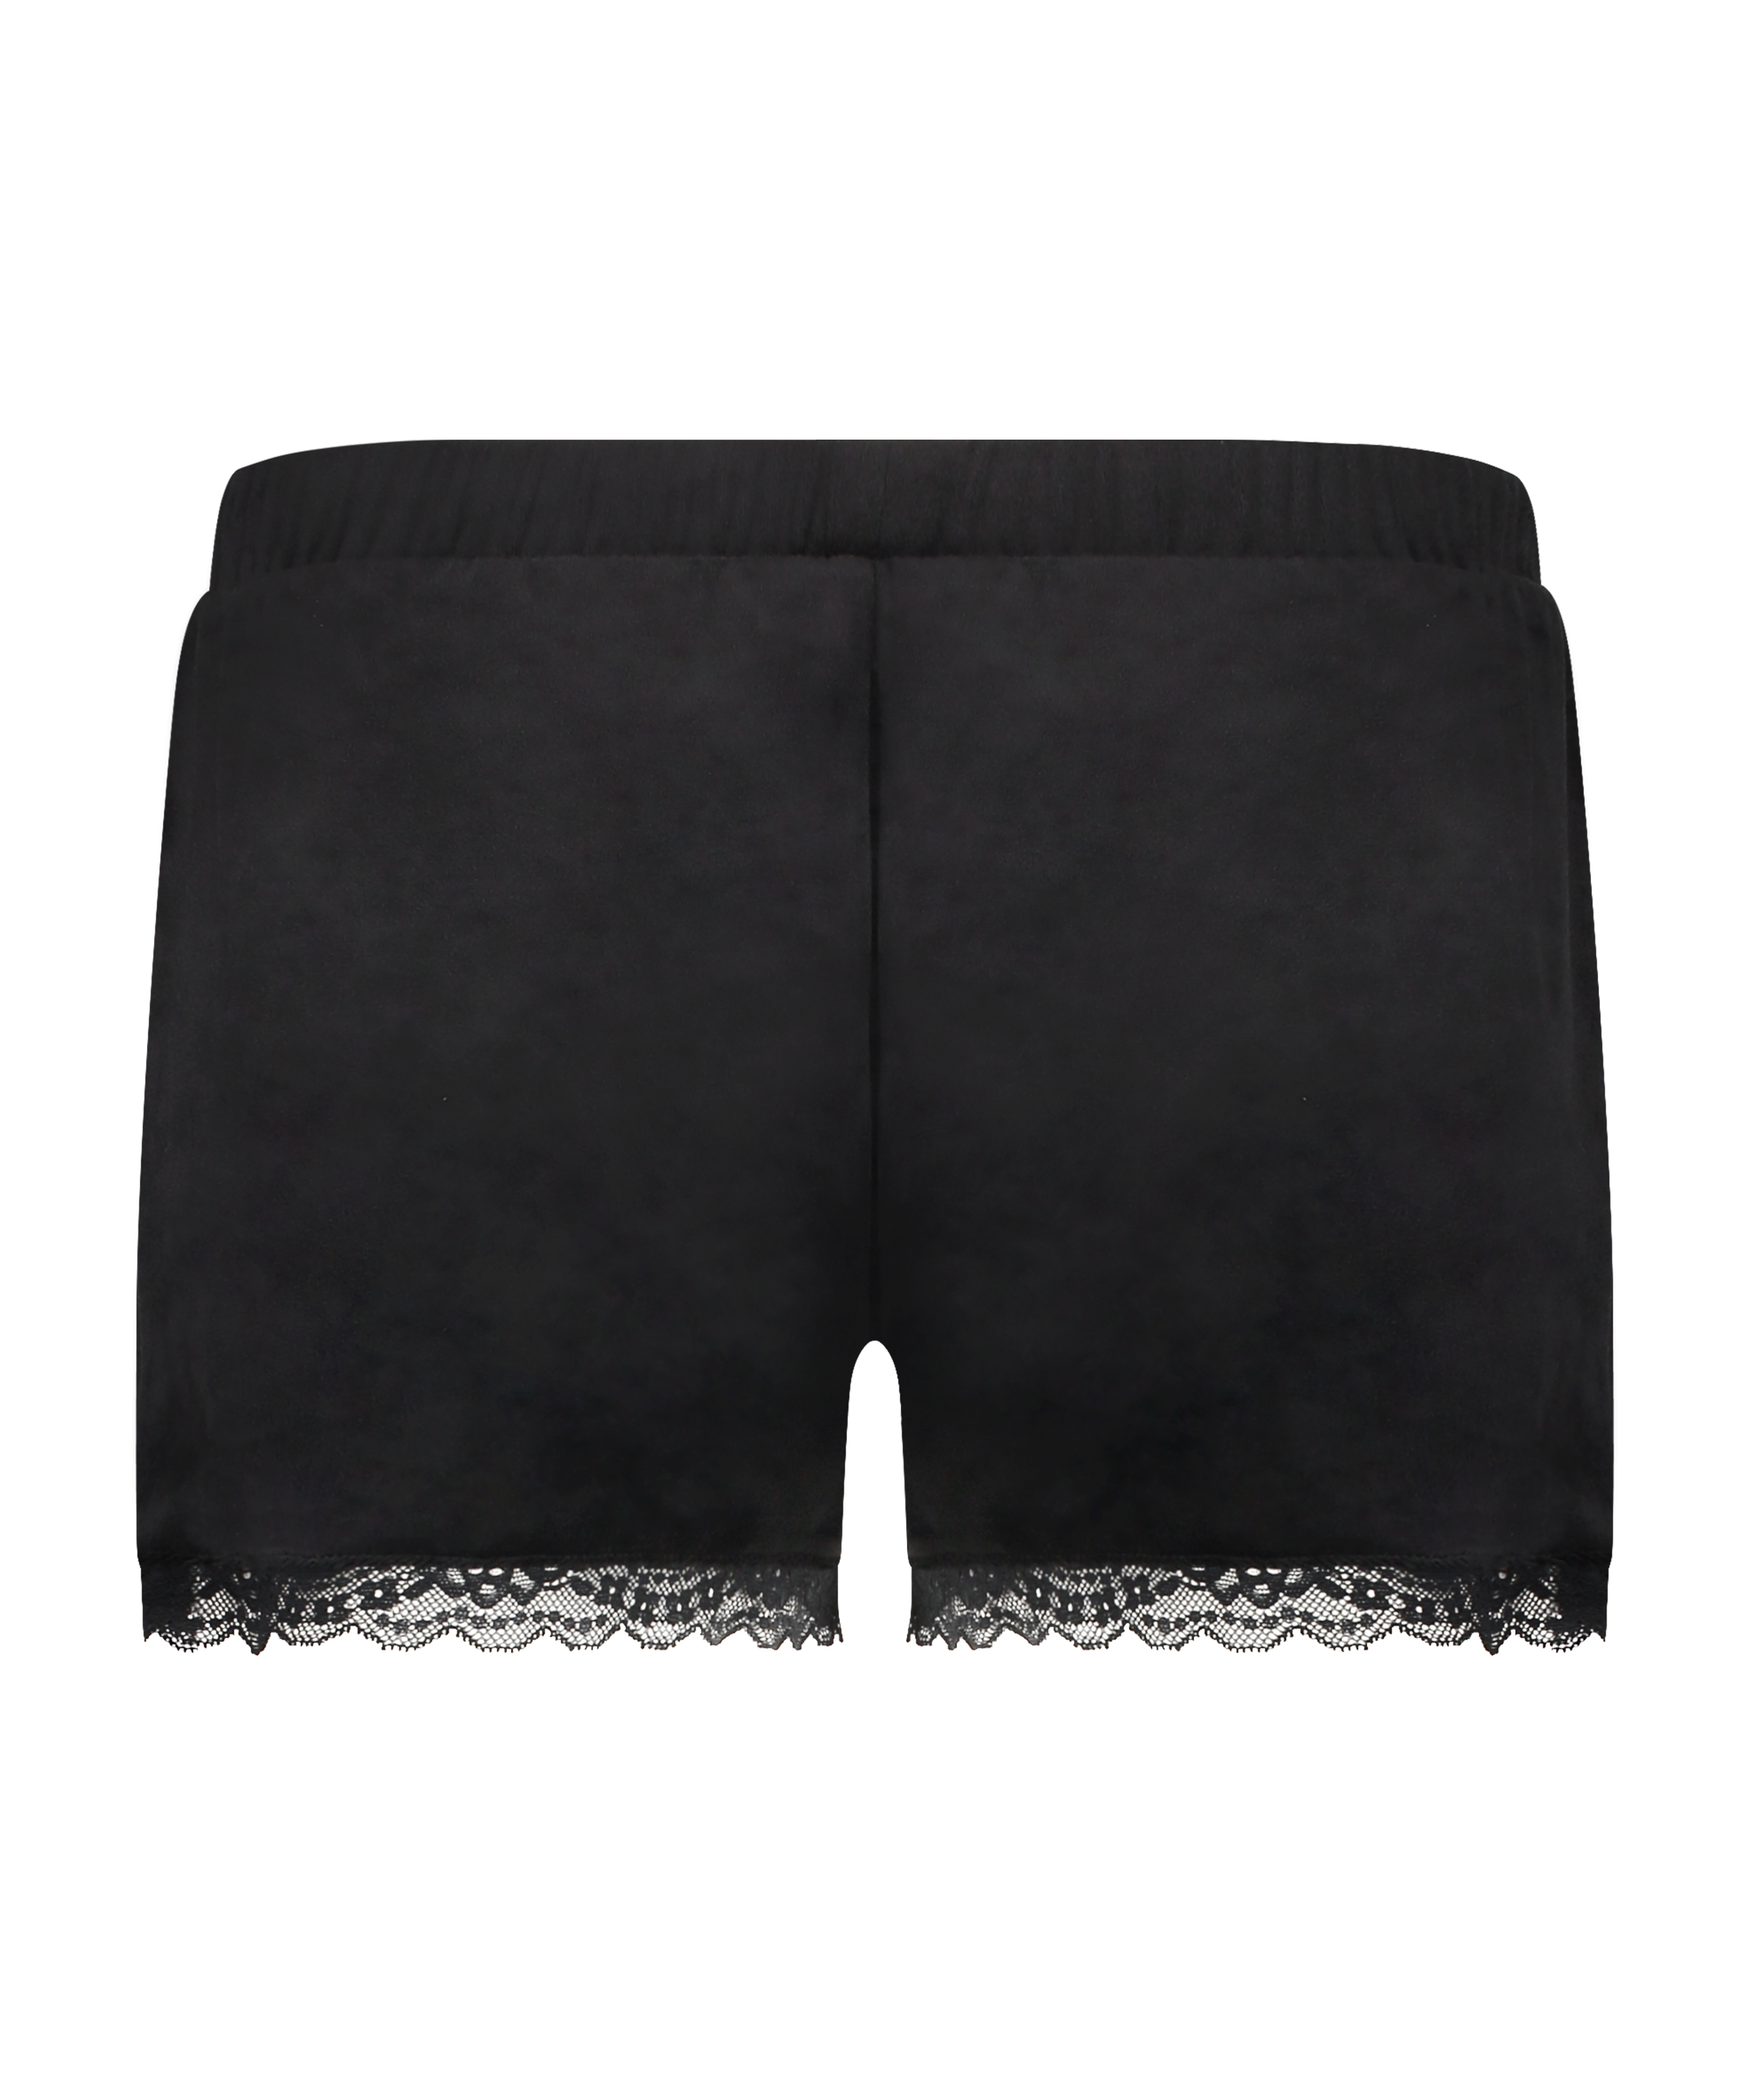 Velvet Lace Shorts For €24 99 Pajama Pants Hunkemöller